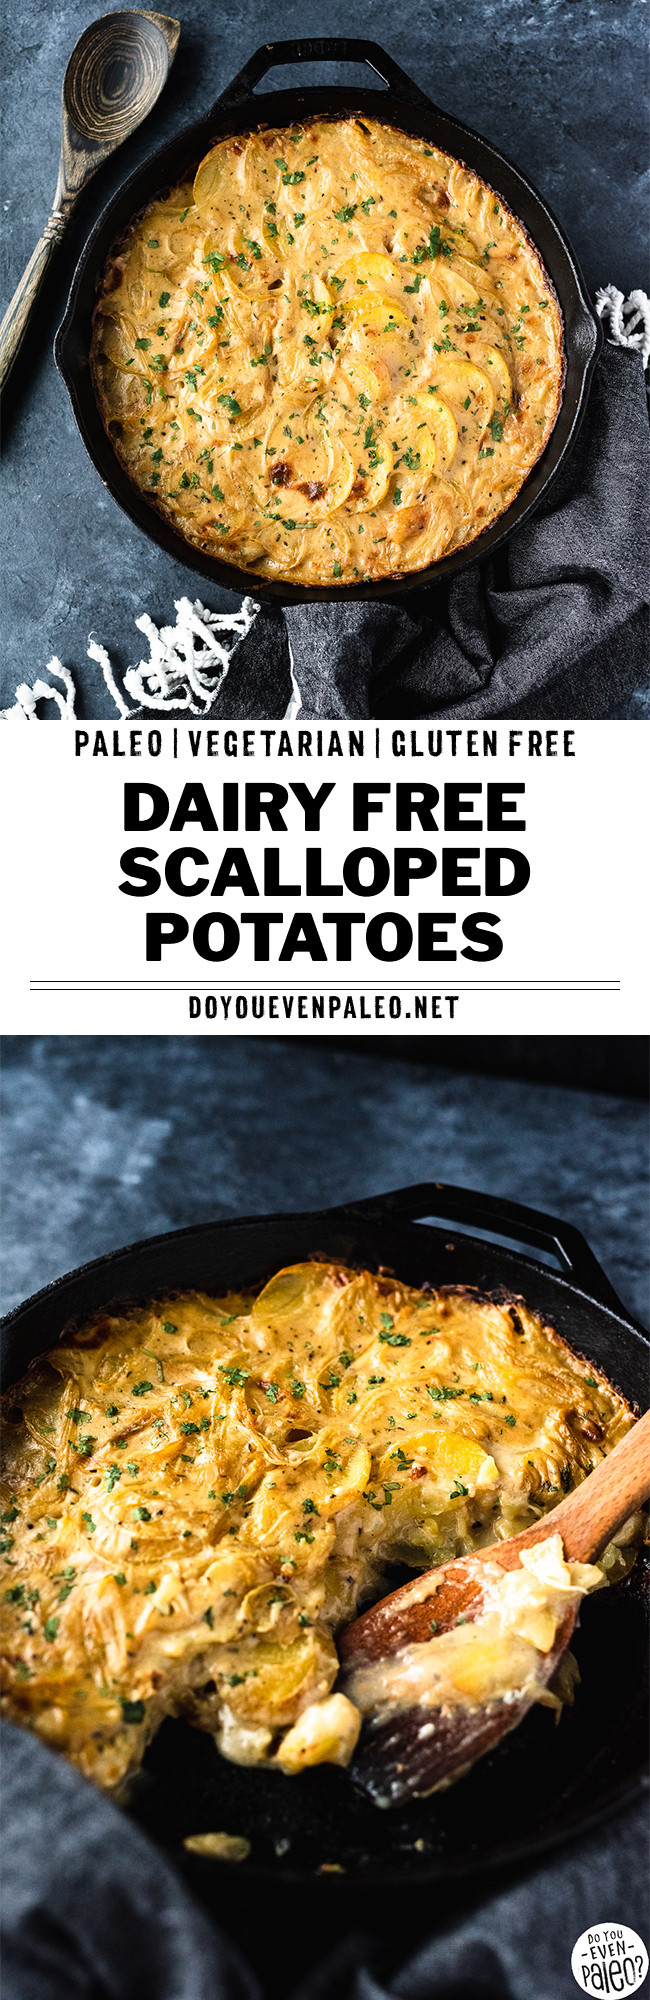 Gluten Free Dairy Free Scalloped Potatoes
 Dairy Free Scalloped Potatoes